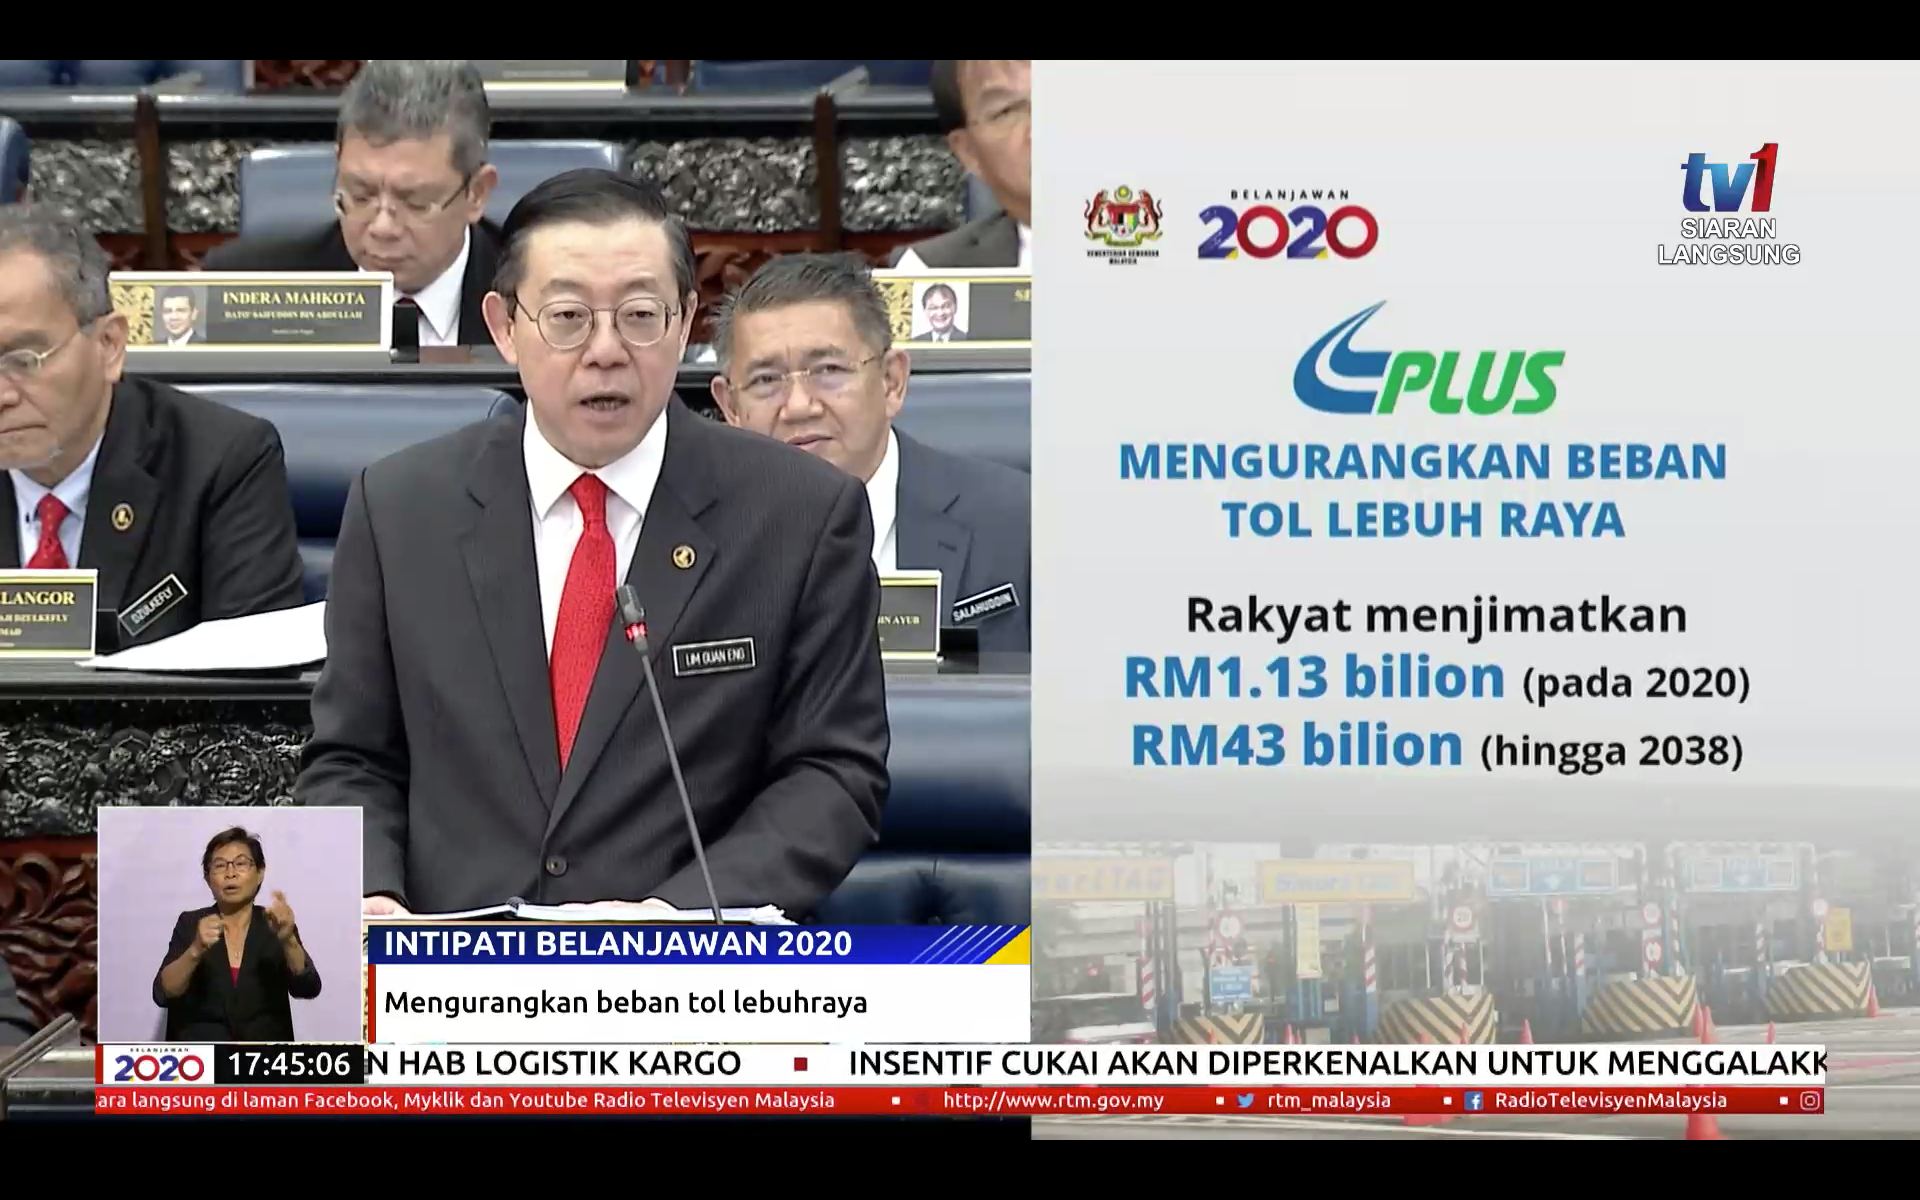 budget-2020-govt-to-acquire-kesas-ldp-sprint-smart-tolls-rates-up